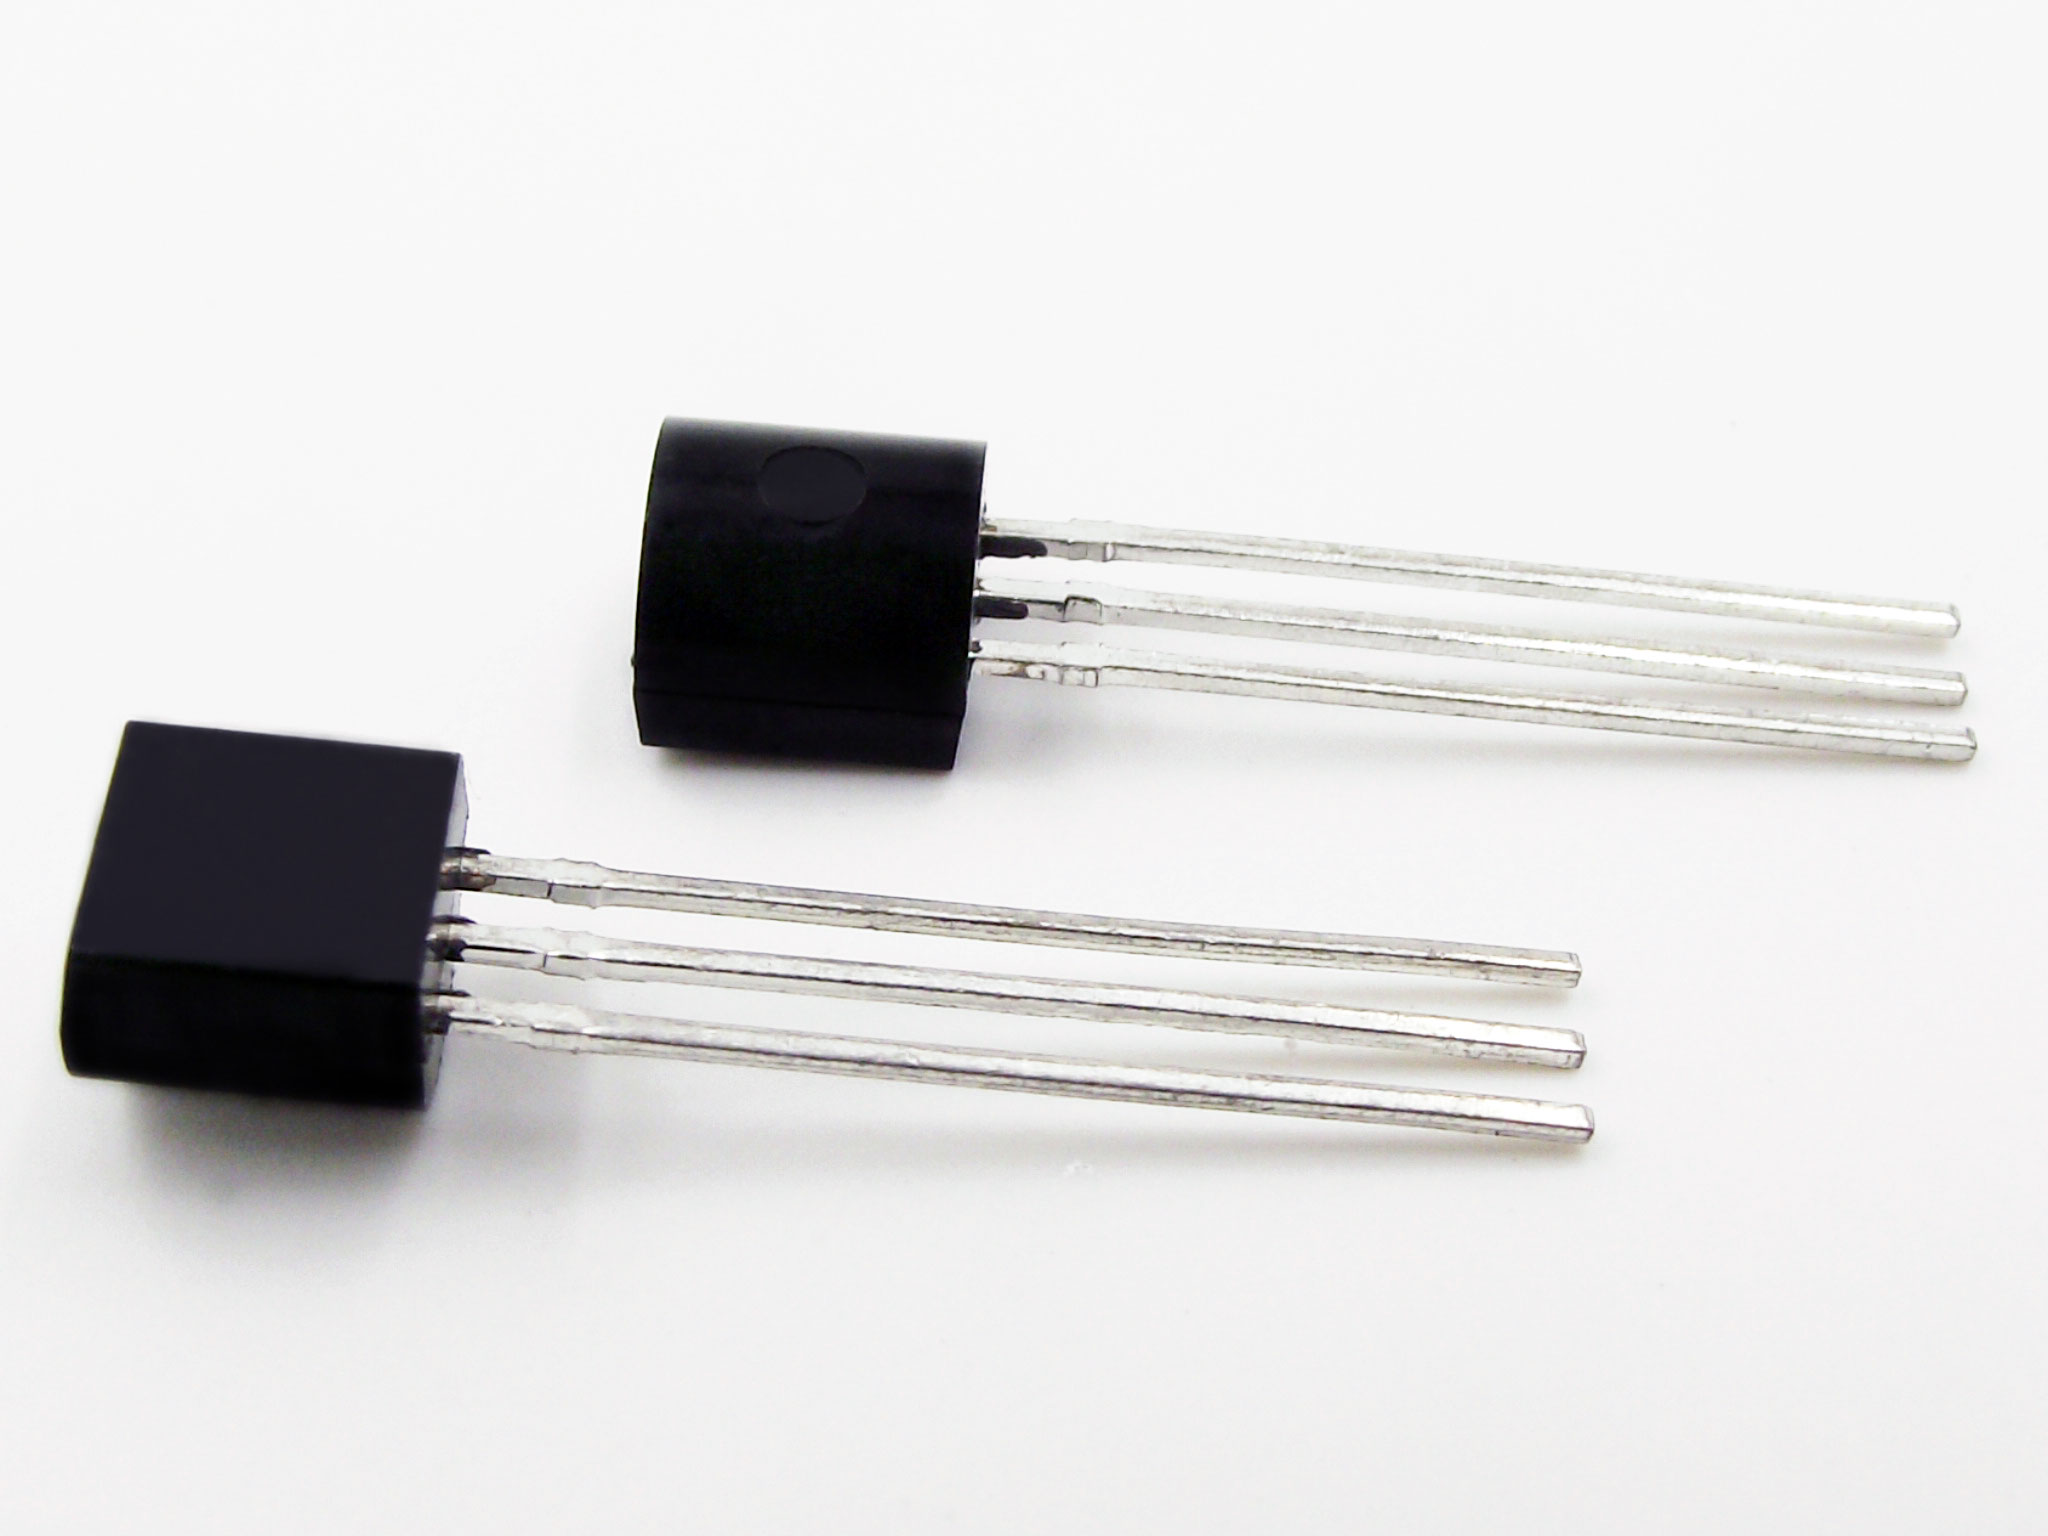 50PCS MCR100-8 0.8A/600V SCR TO-92 DIP Transistor S